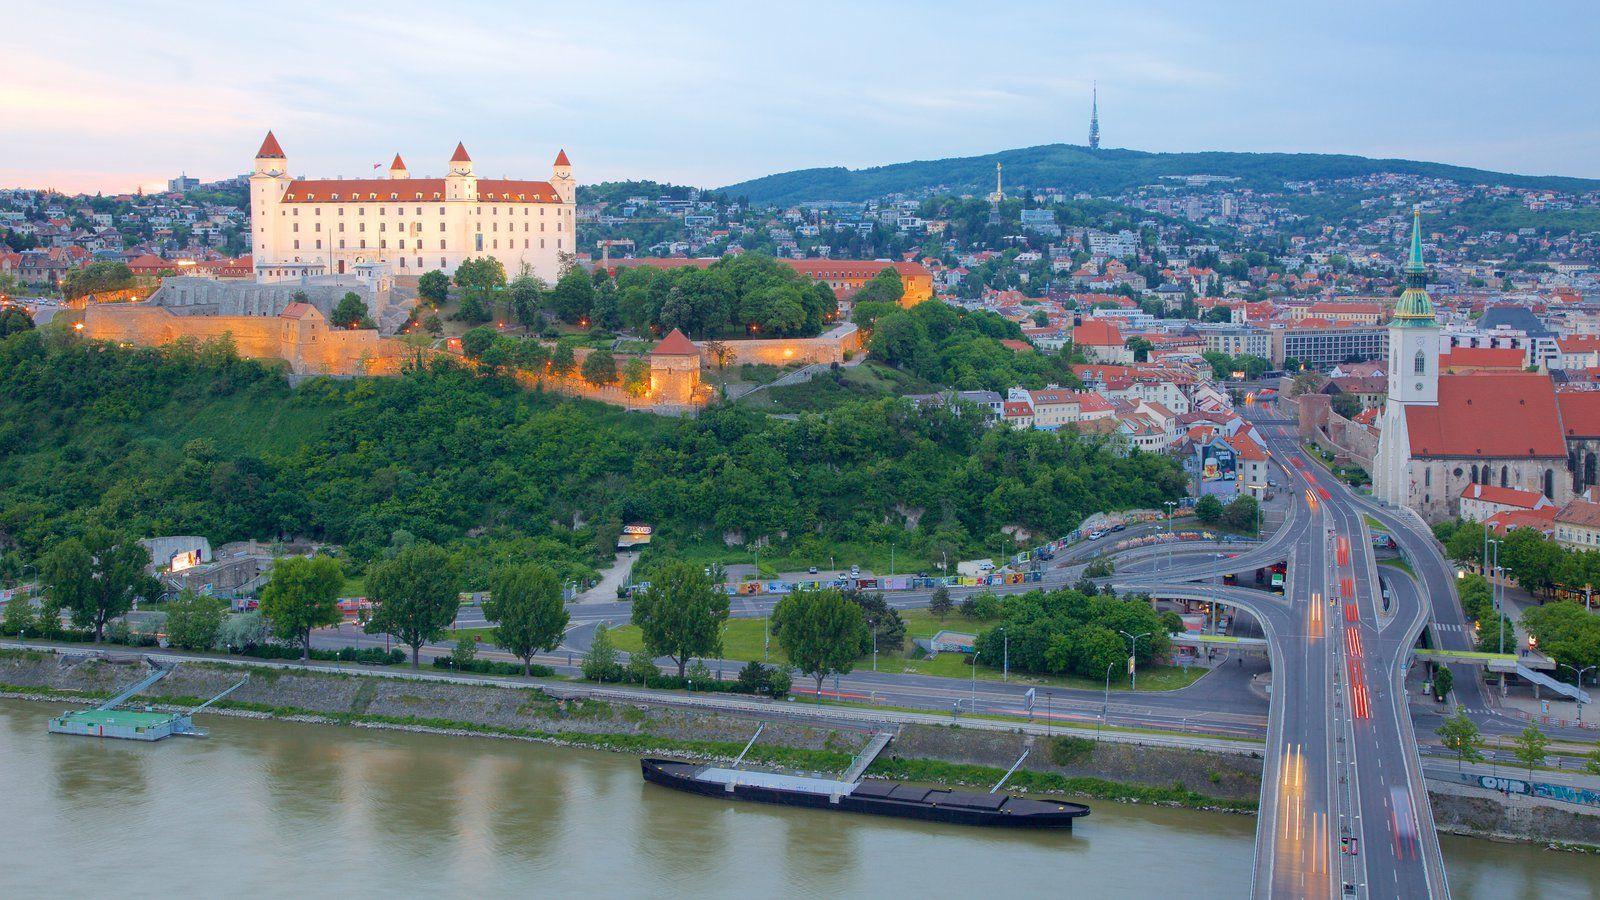 Castles & Palaces Picture: View Image of Bratislava